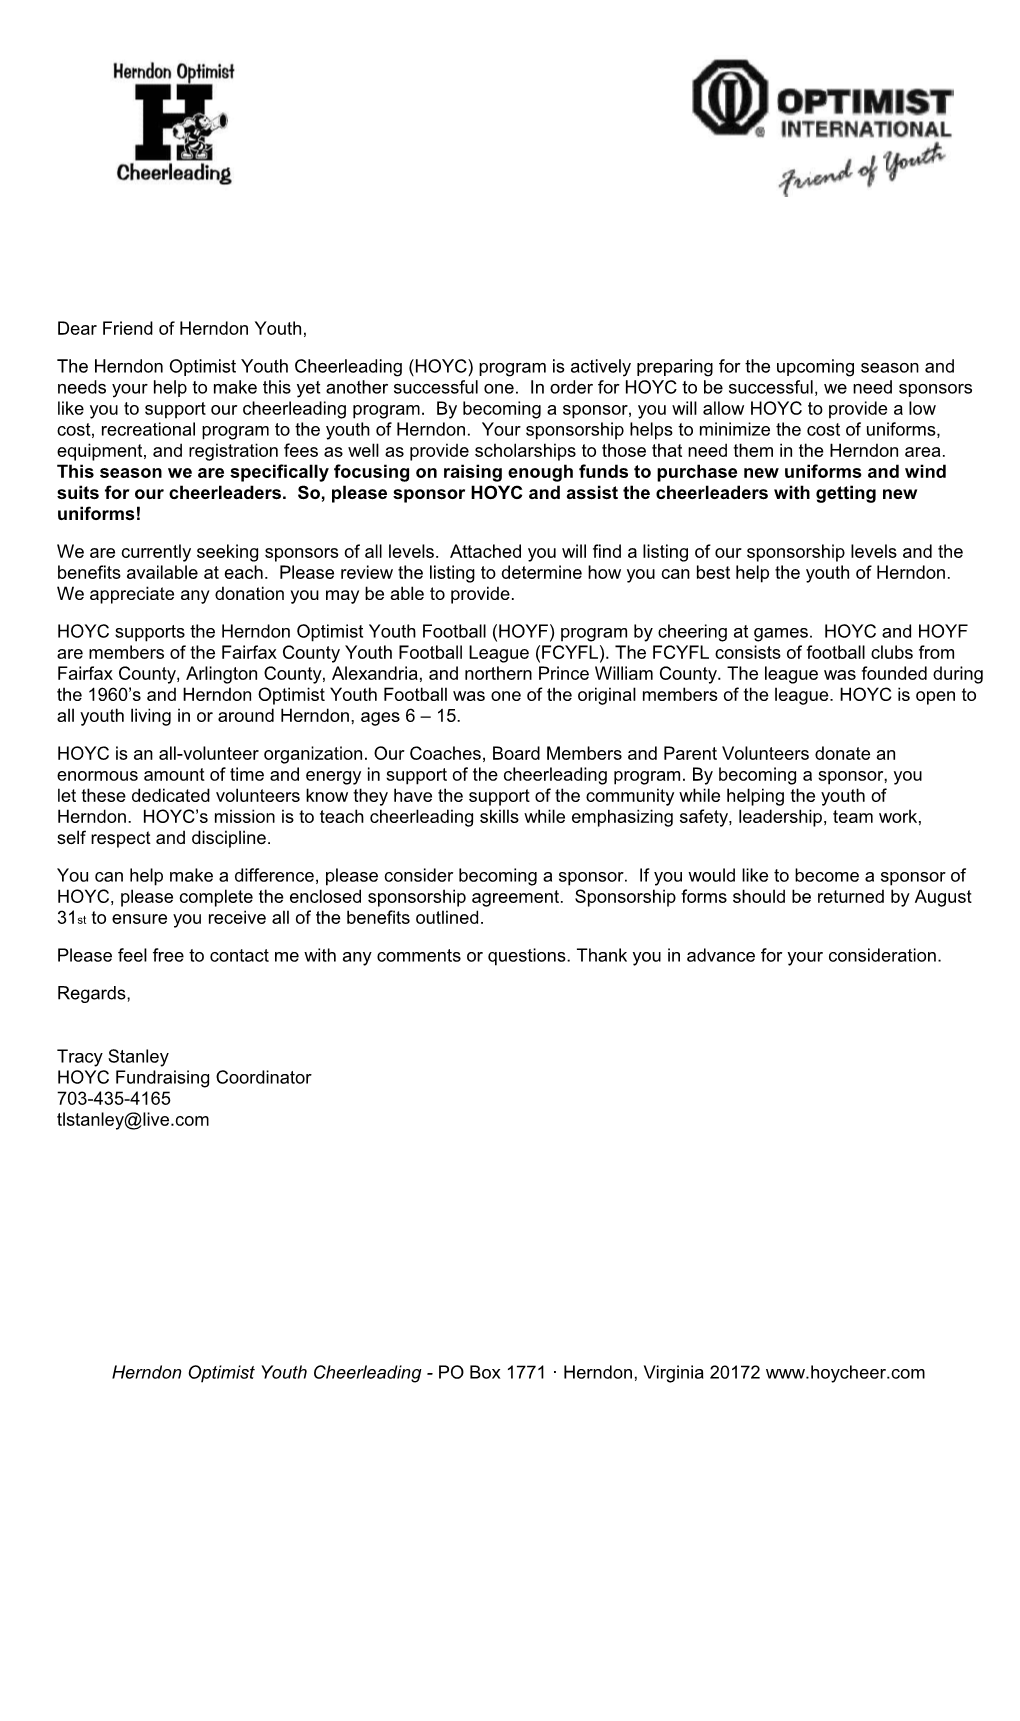 HOYC Sponsor Letter-Benefits 2008